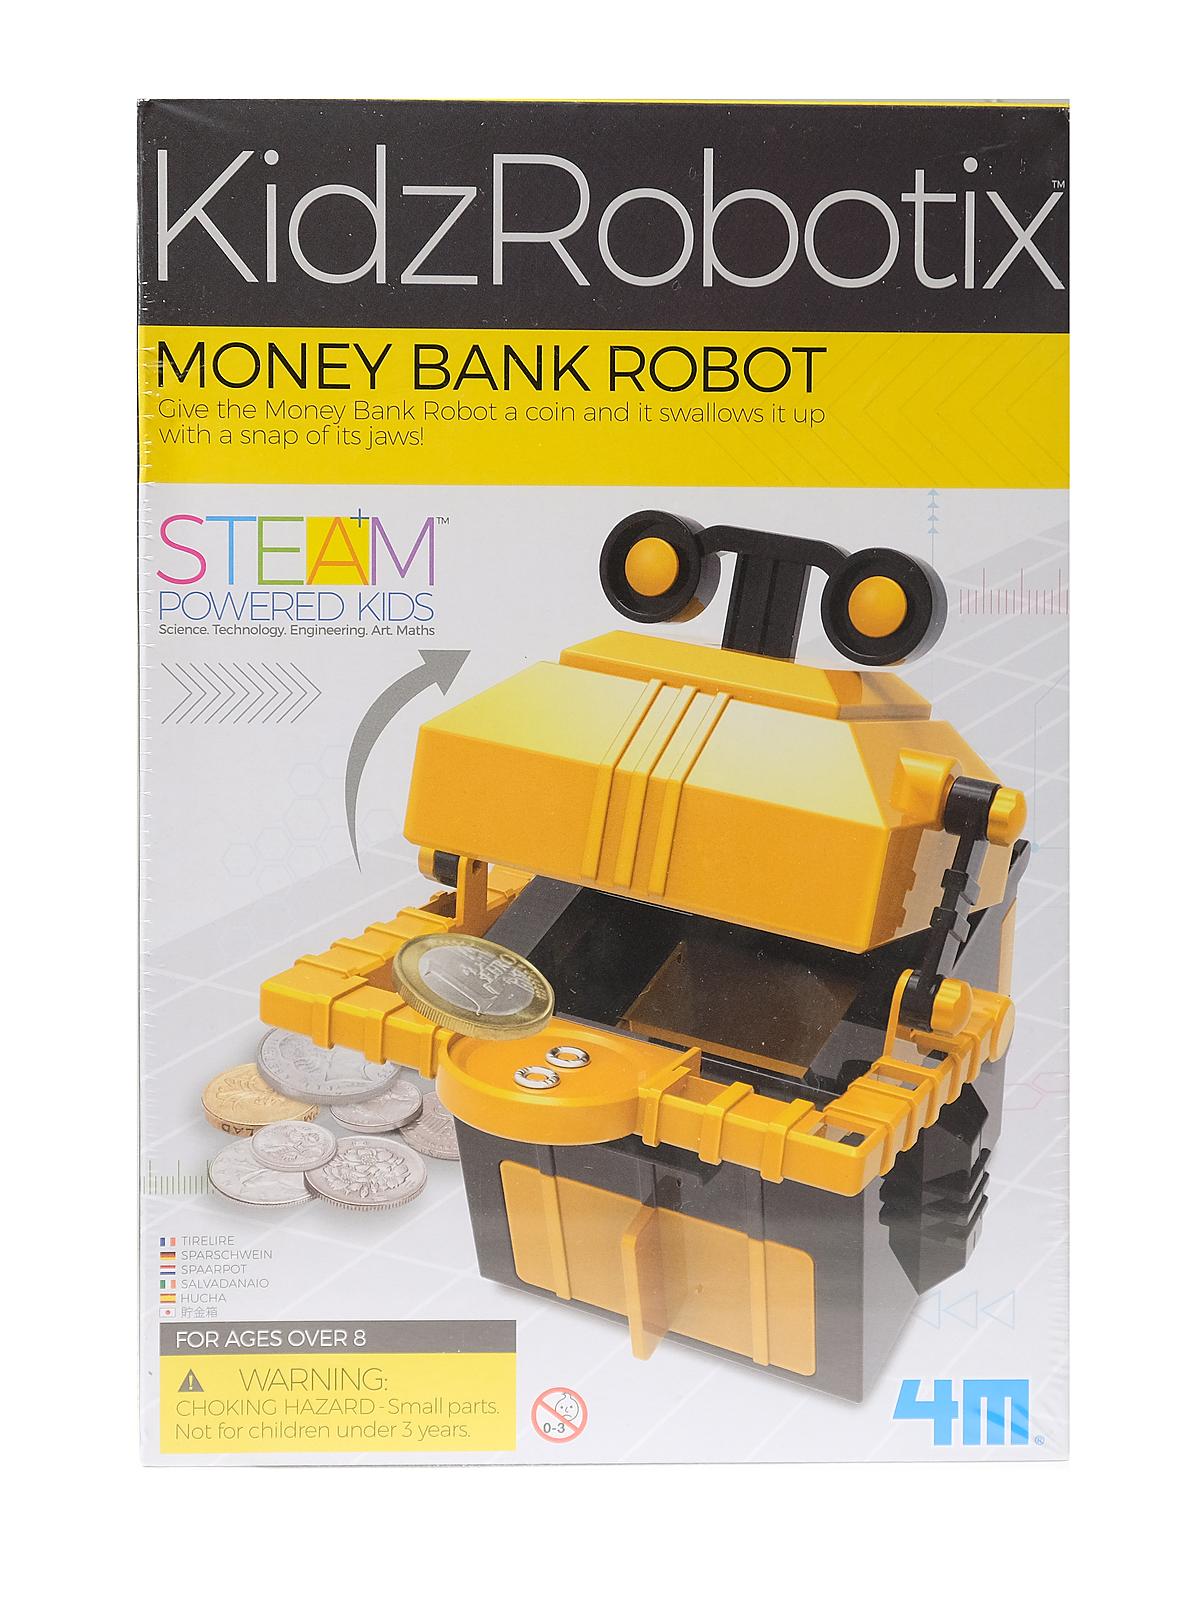 Kidz Robotix Money Bank Robot Kit